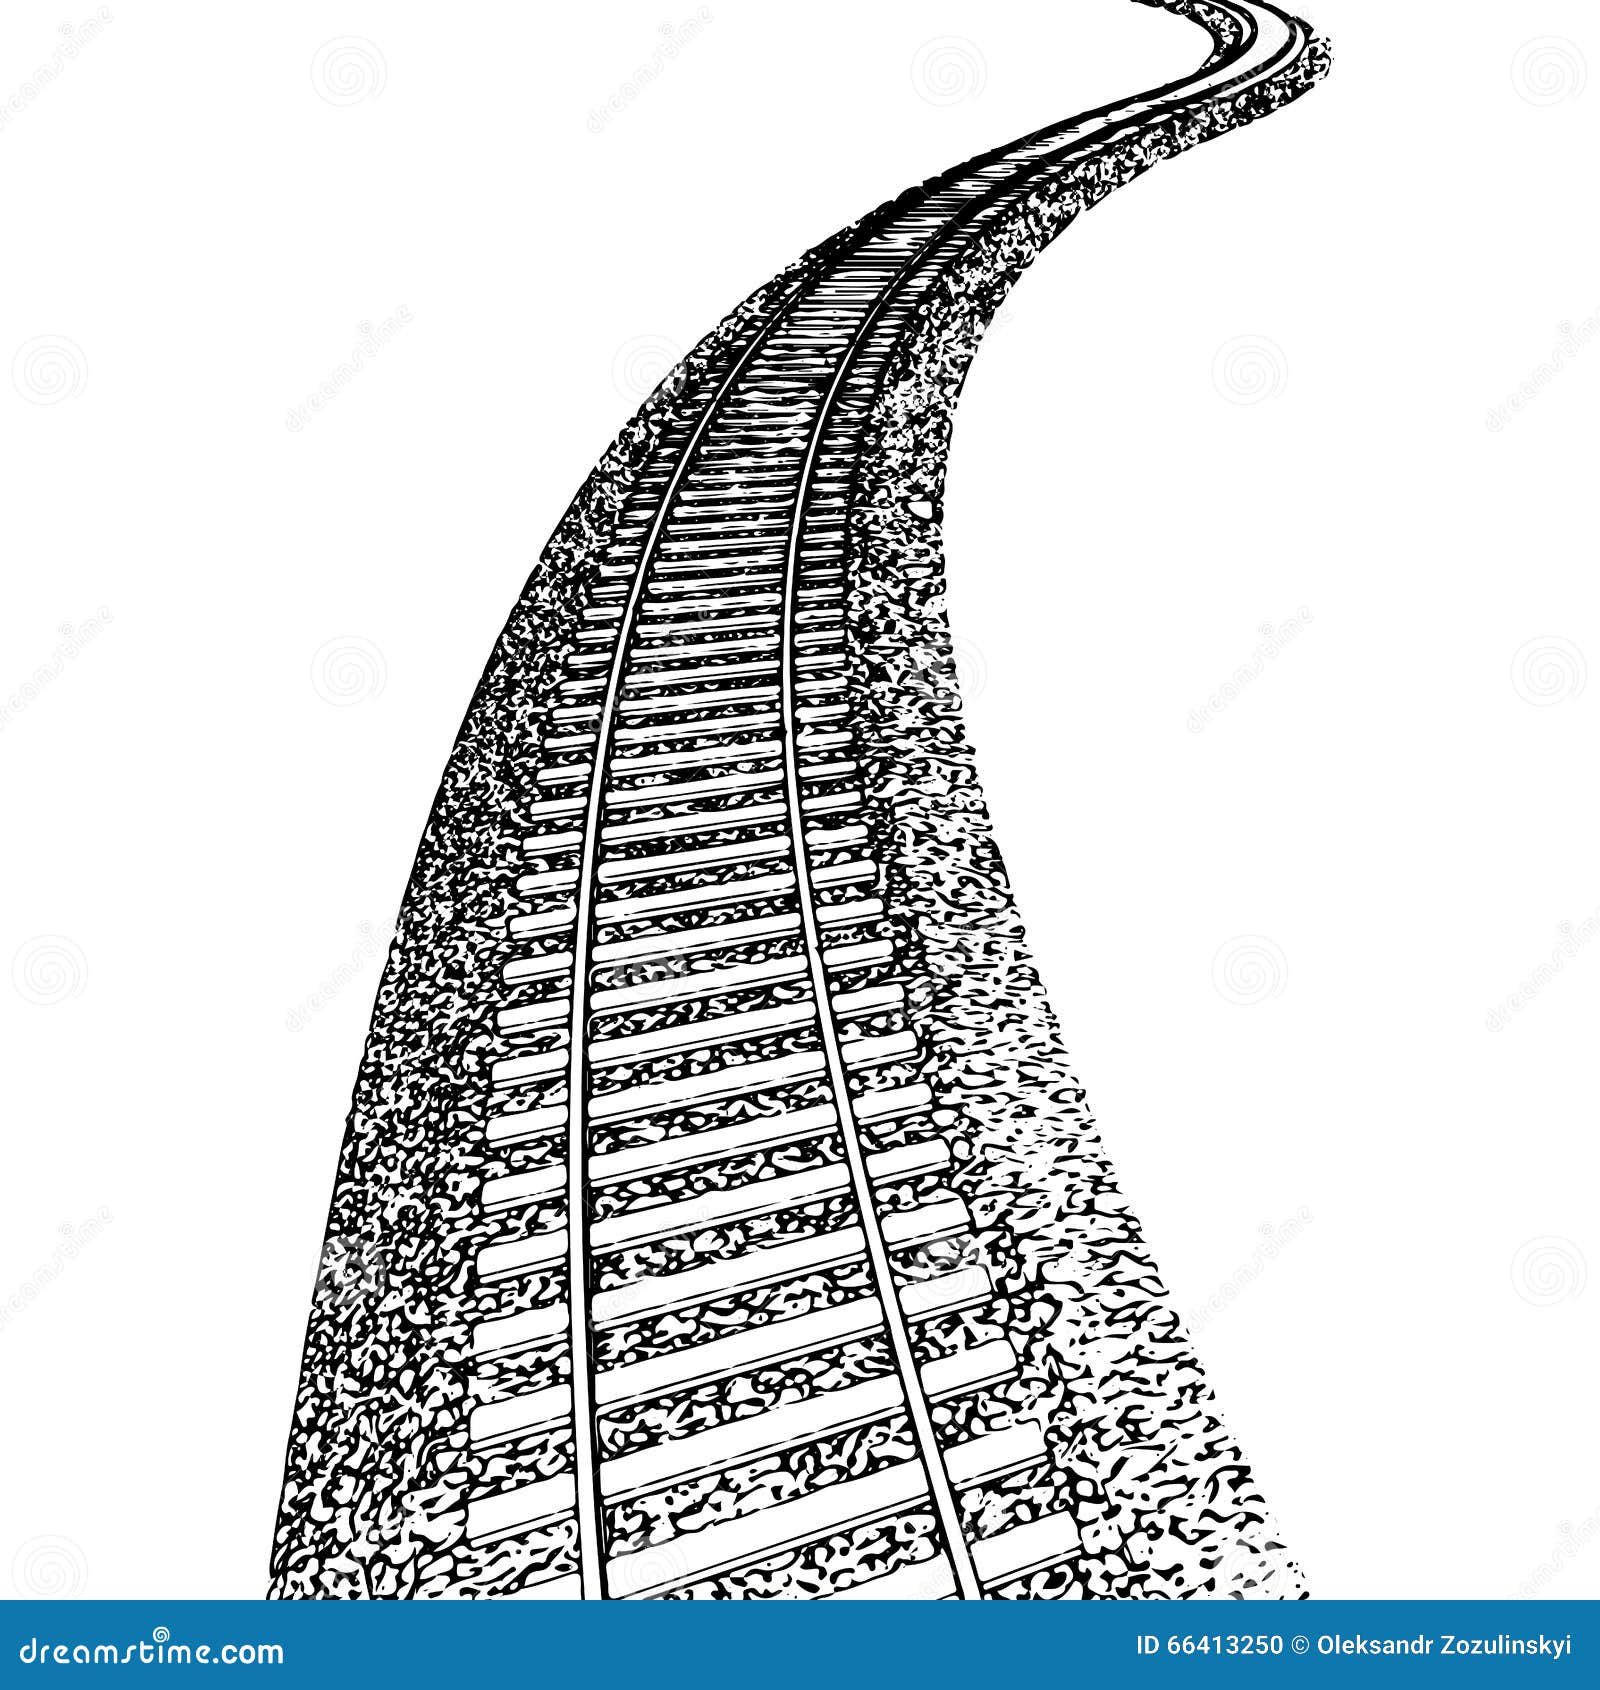 M3a1 Half Track Sketch by AaronThomasArt on DeviantArt